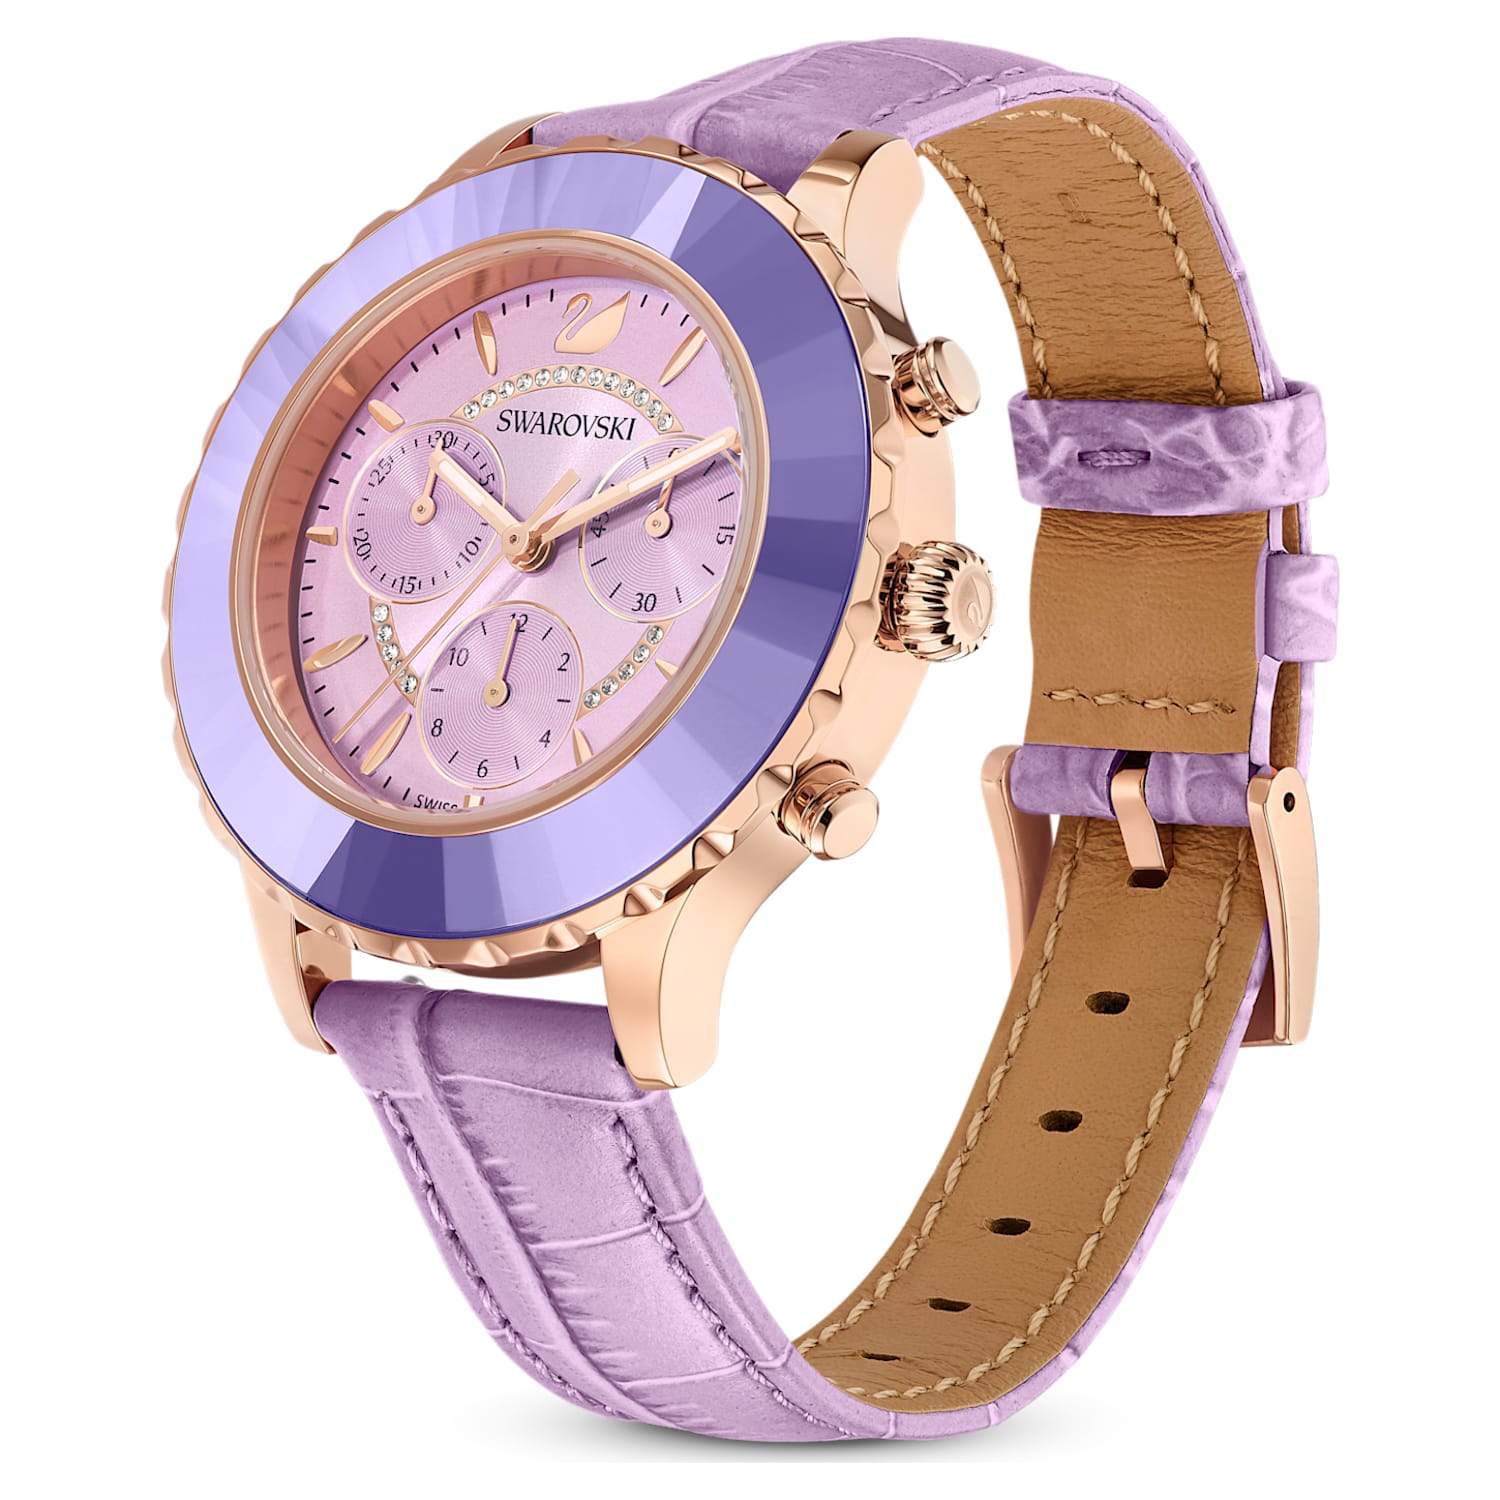 Swarovski Octea Lux Chrono Purple Dial Purple Leather Strap Watch for Women - 5632263